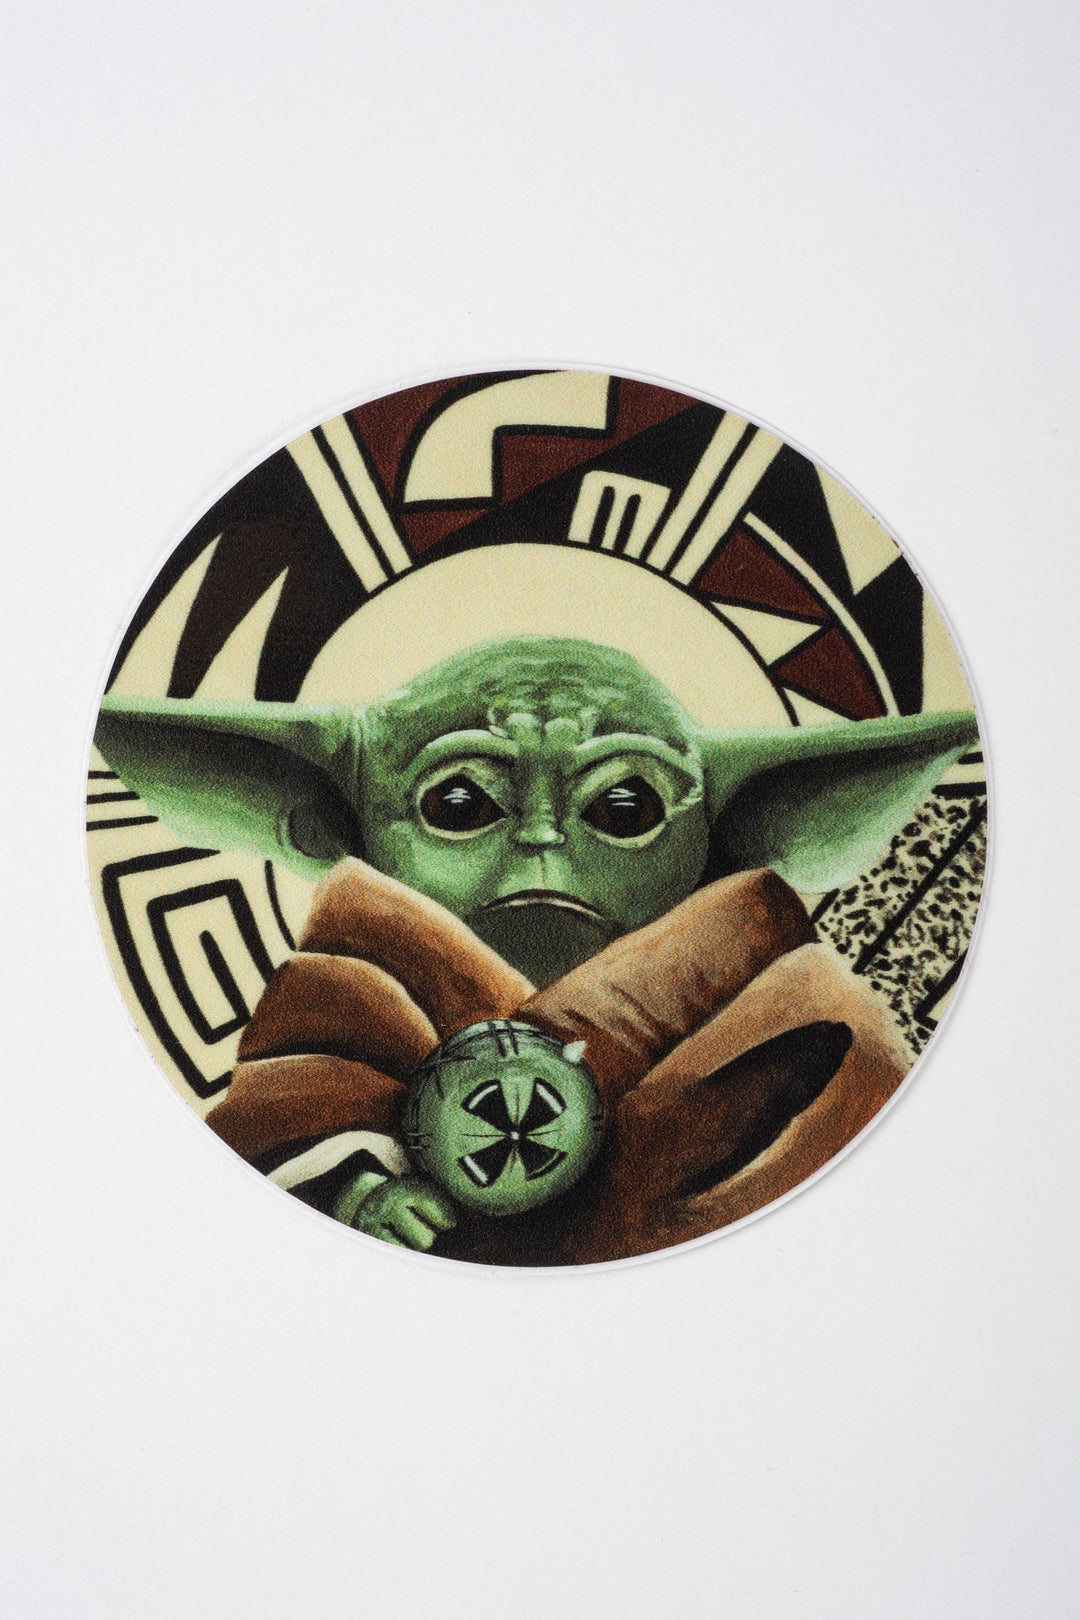 Baby Yoda "Grogu" Star Wars Hopi Artwork Sticker